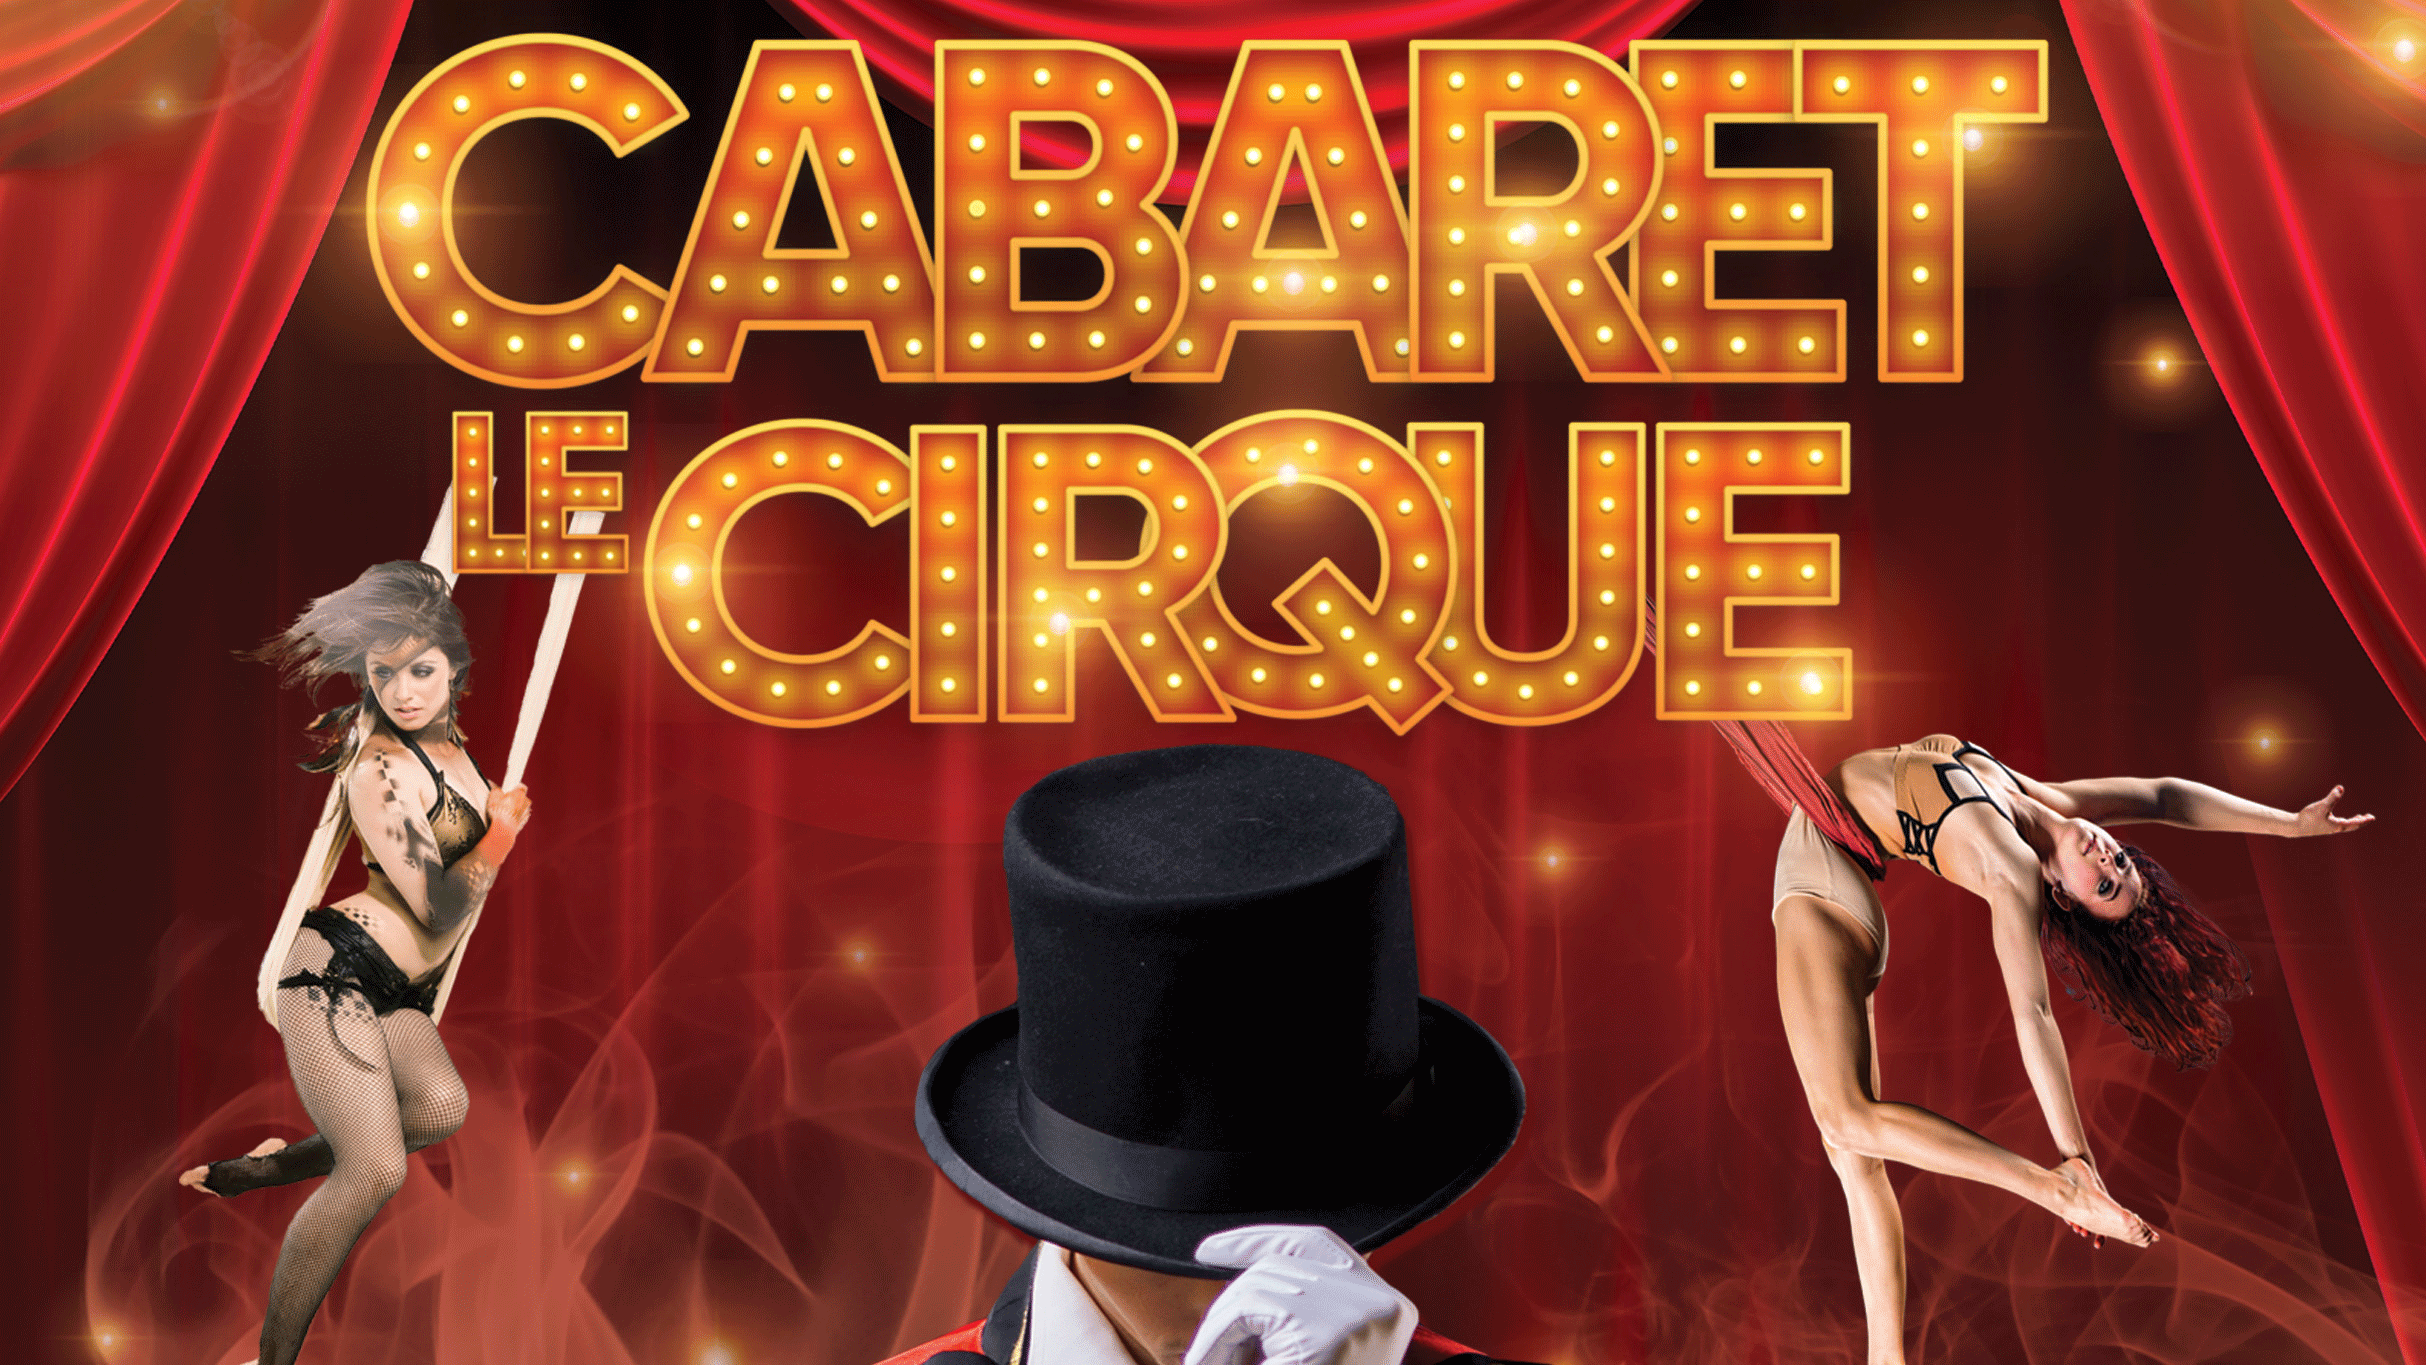 Cabaret Le Cirque in Niagara Falls promo photo for Official Platinum presale offer code